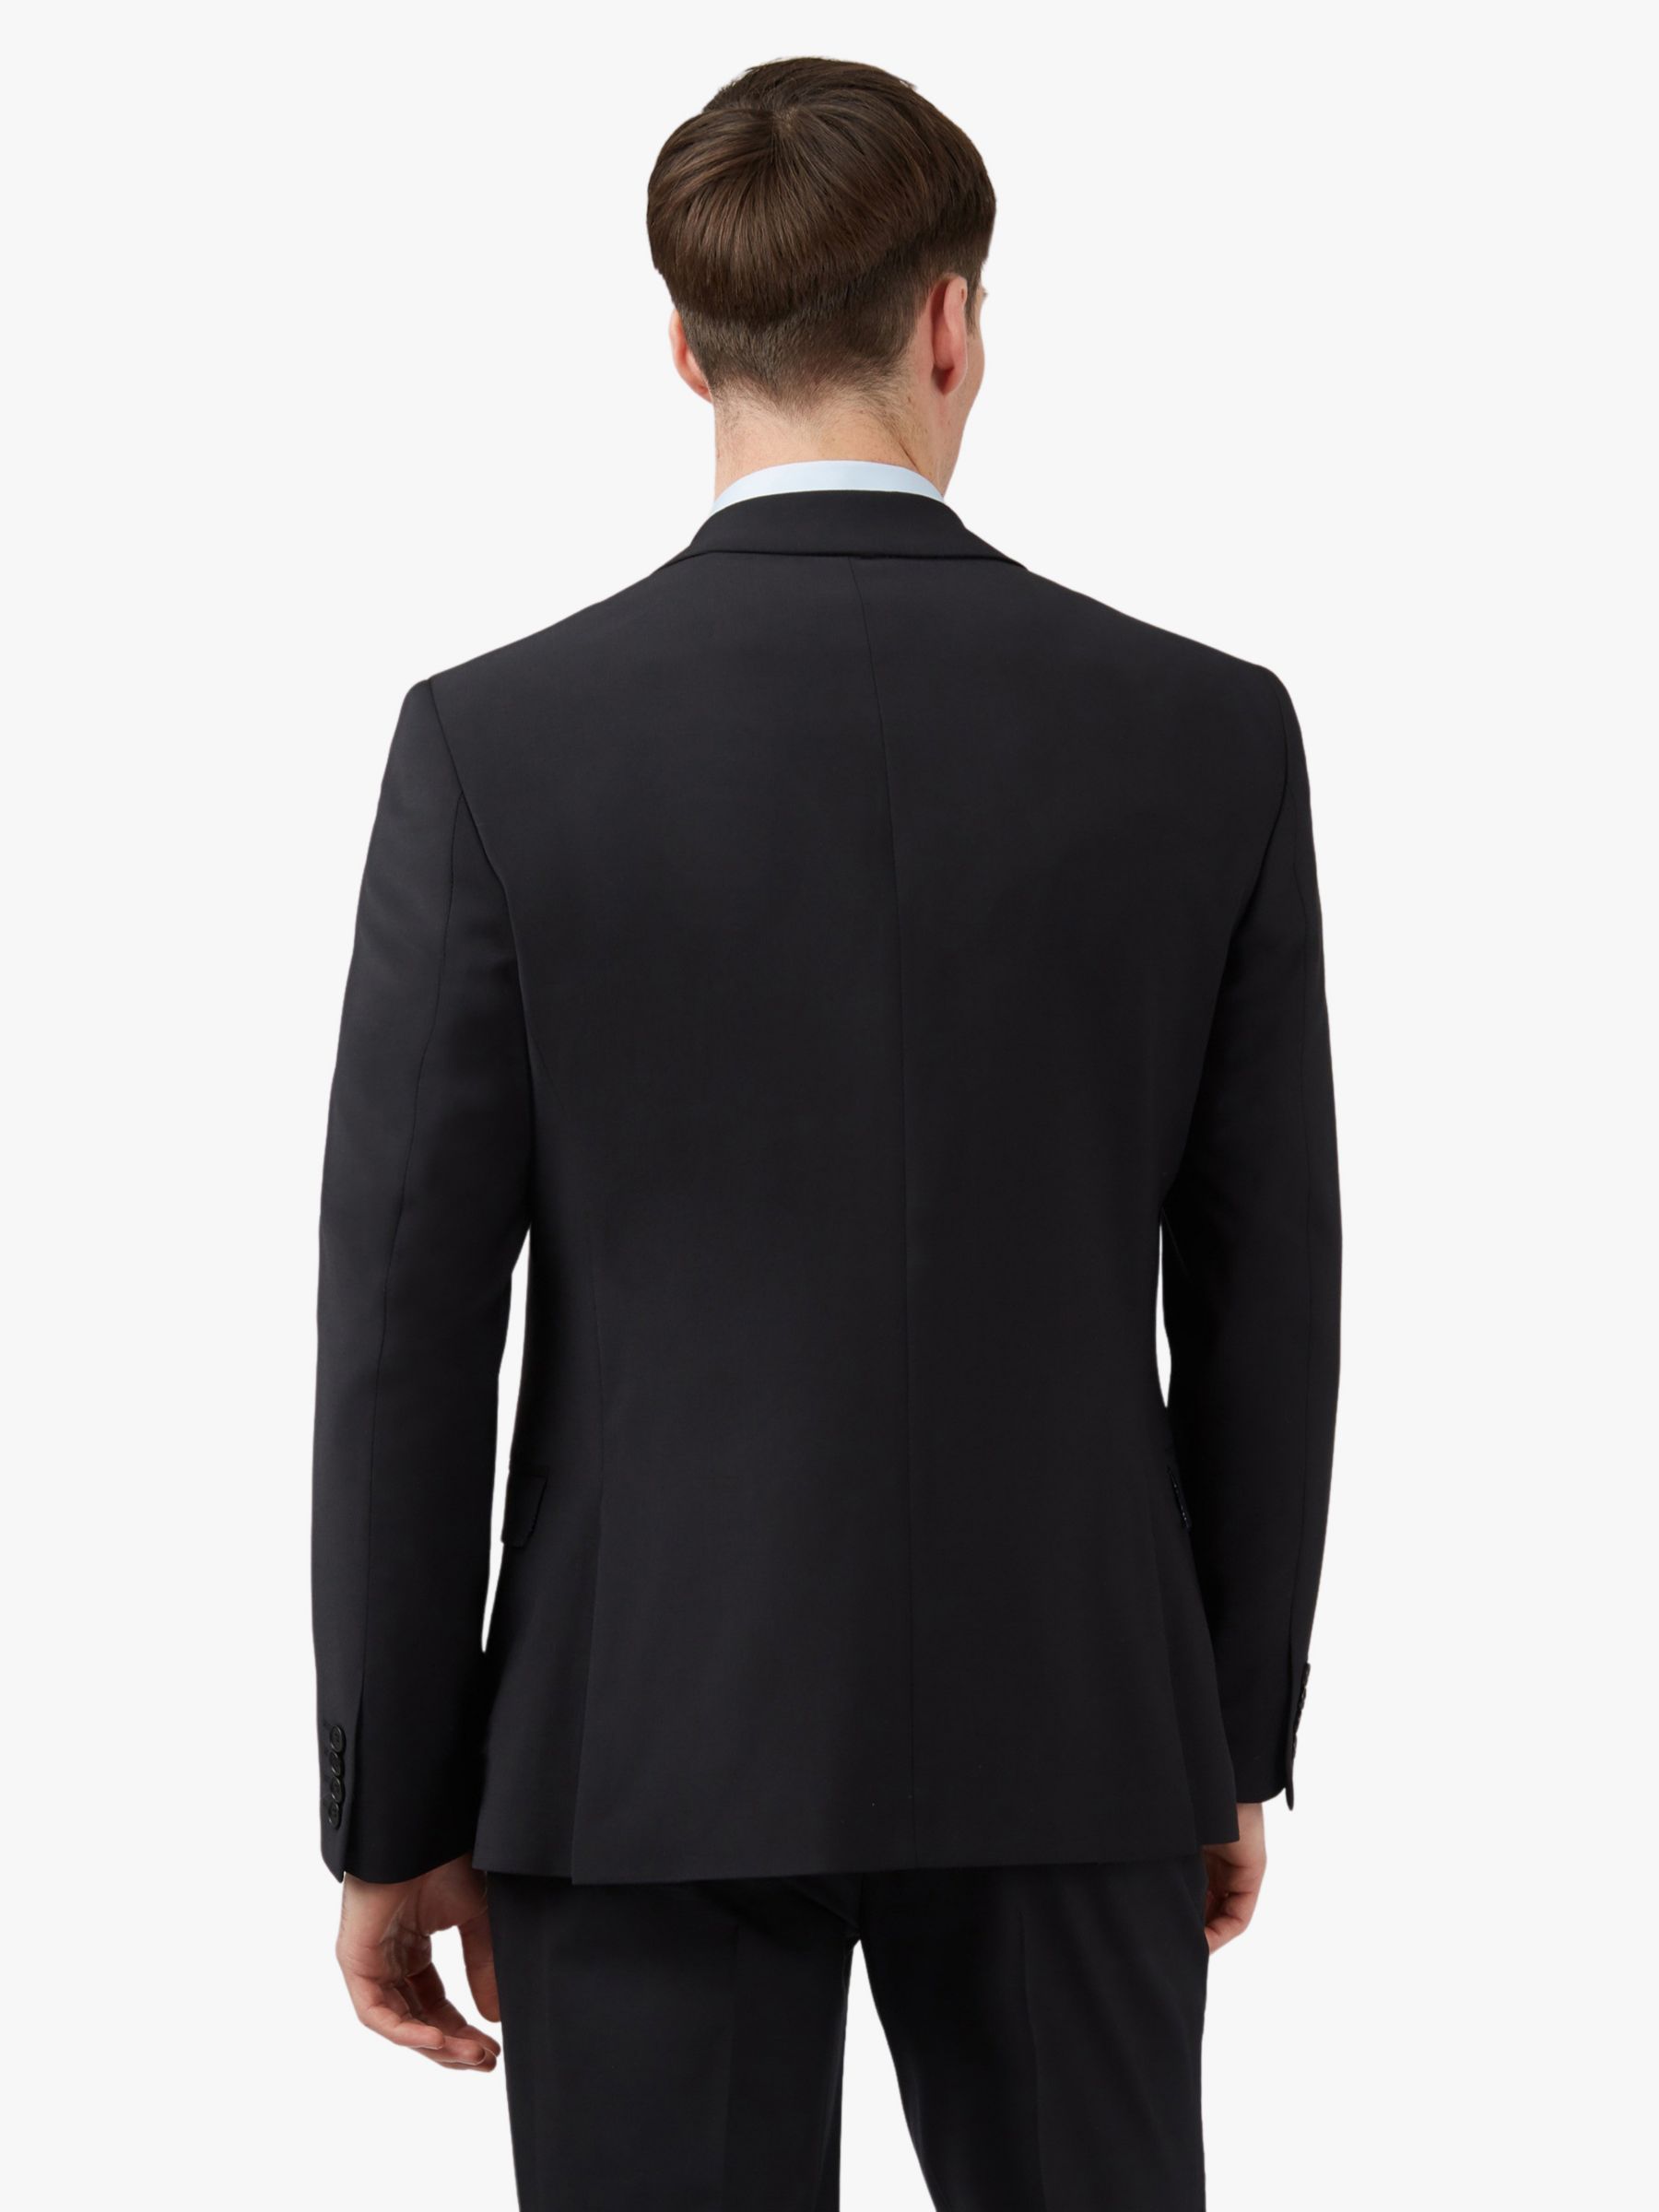 Ted Baker Panama Wool Blend Suit Jacket, Black, 38S